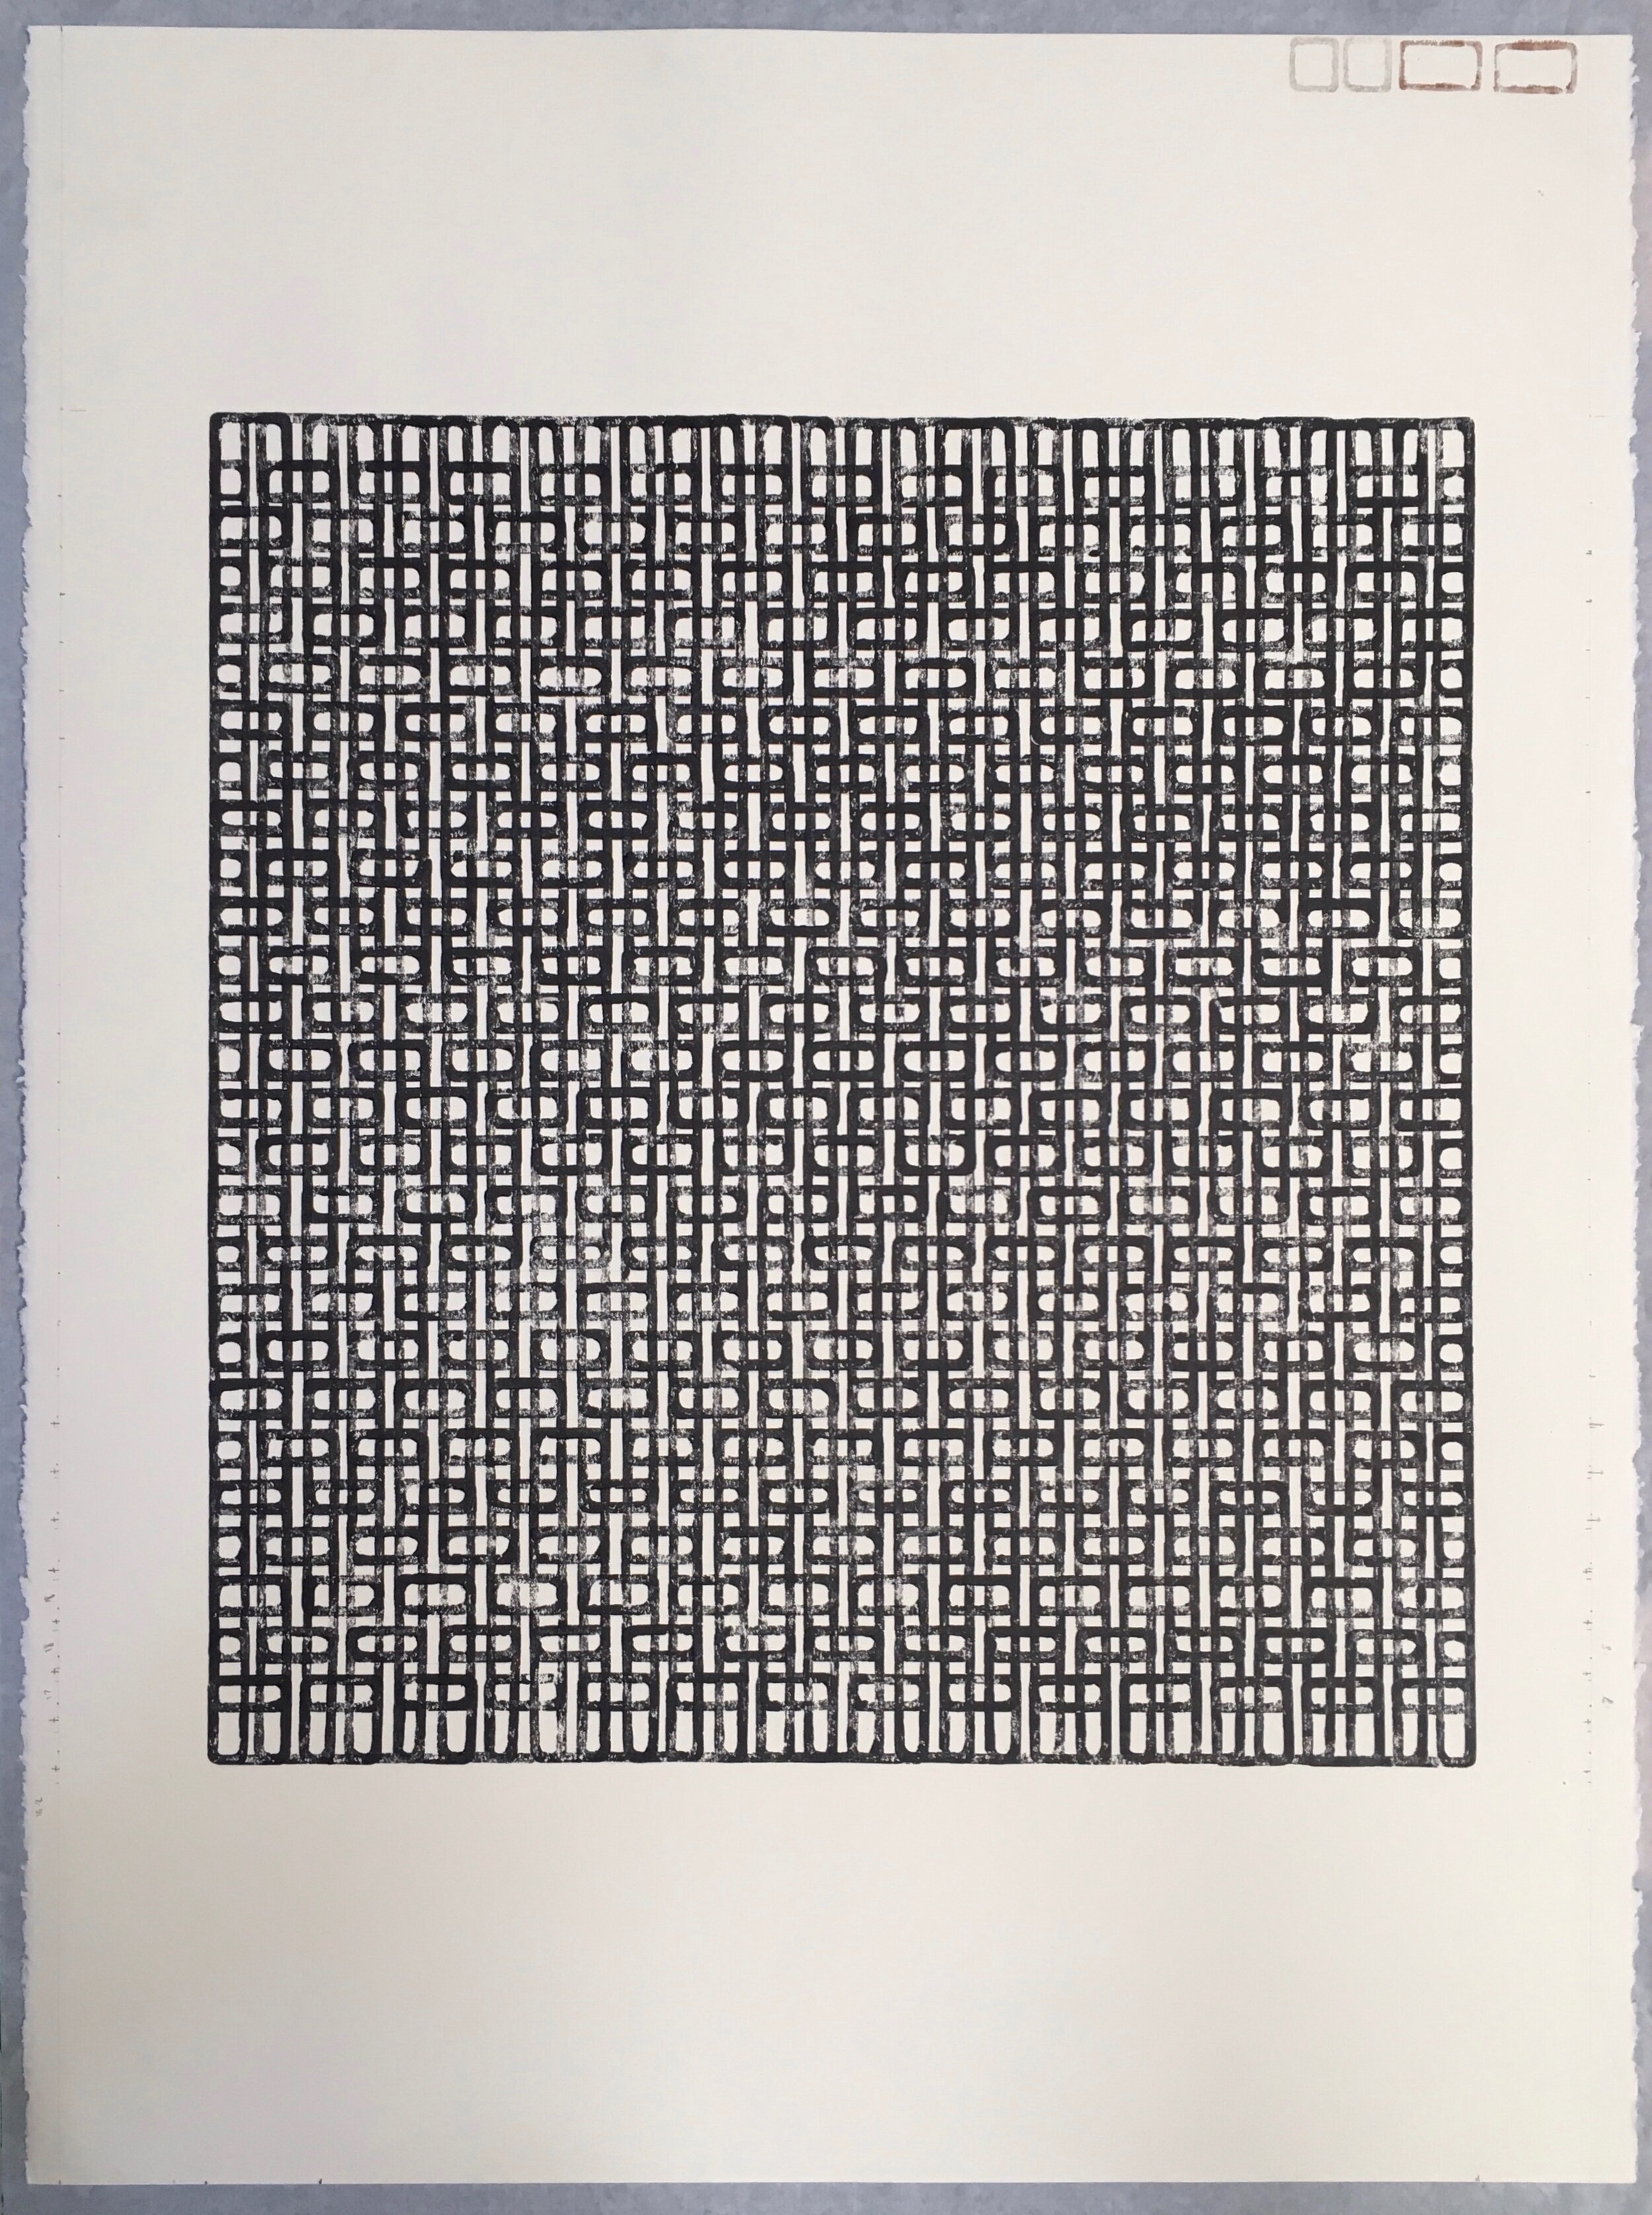  Benjamin Gallagher  5 Fye Foot Lane , 2020 soot on paper Artwork H48cm x W45cm Paper H76cm x W56.5cm 